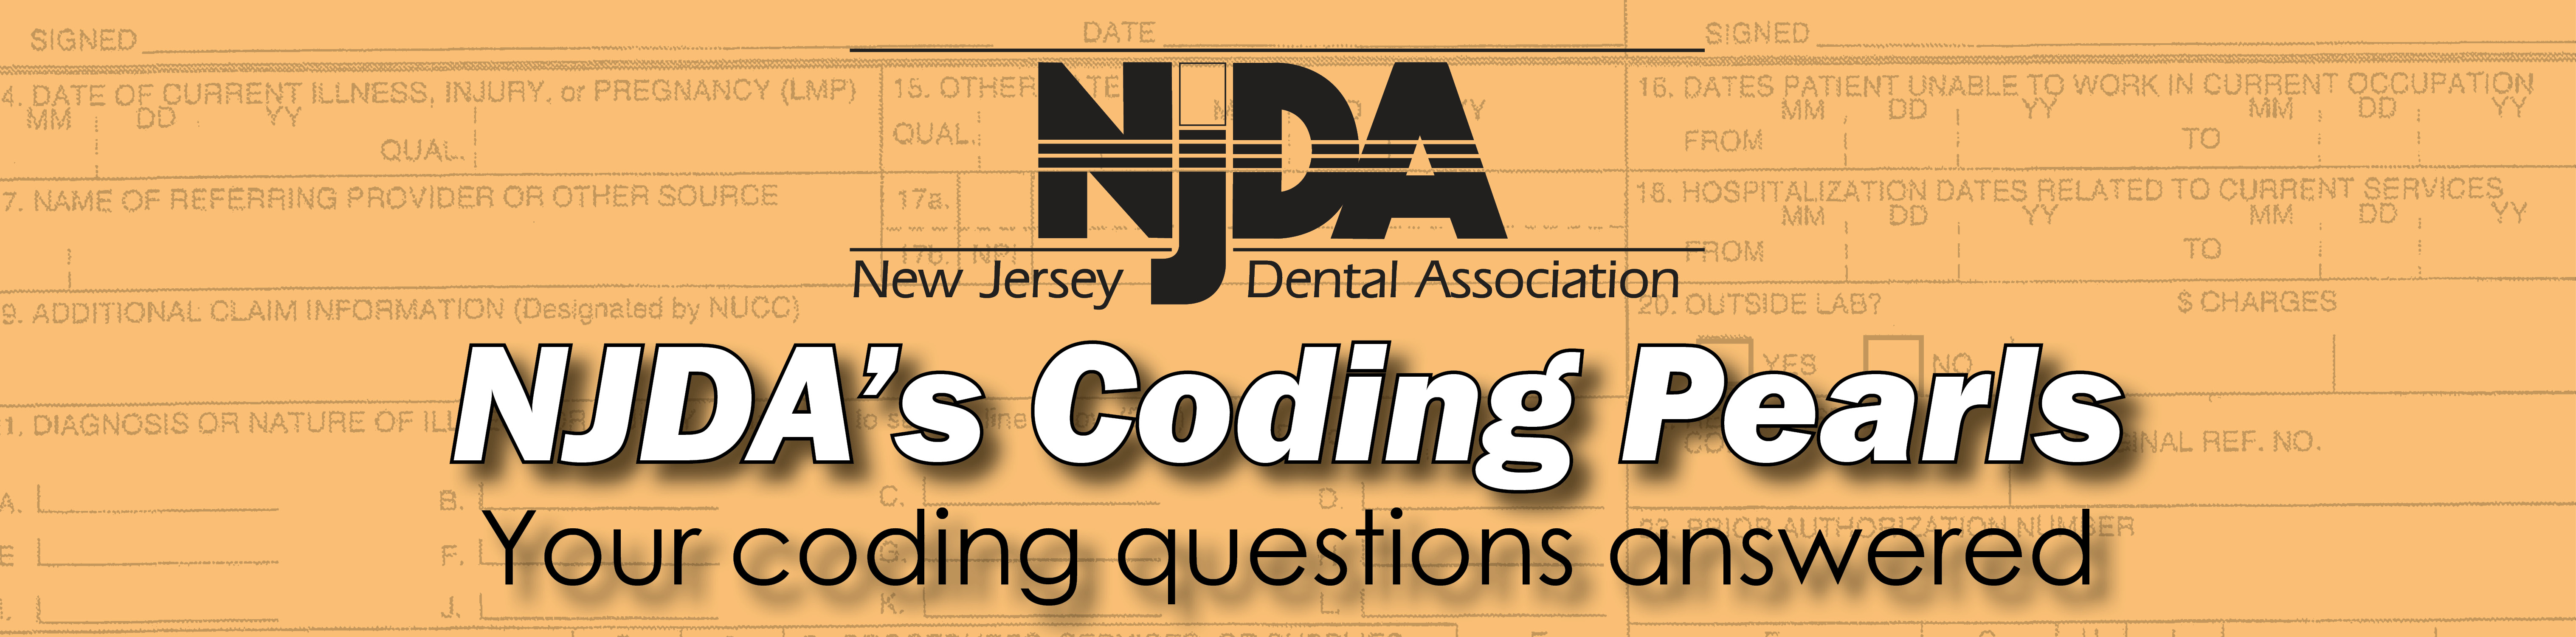 NJDA Coding Pearls